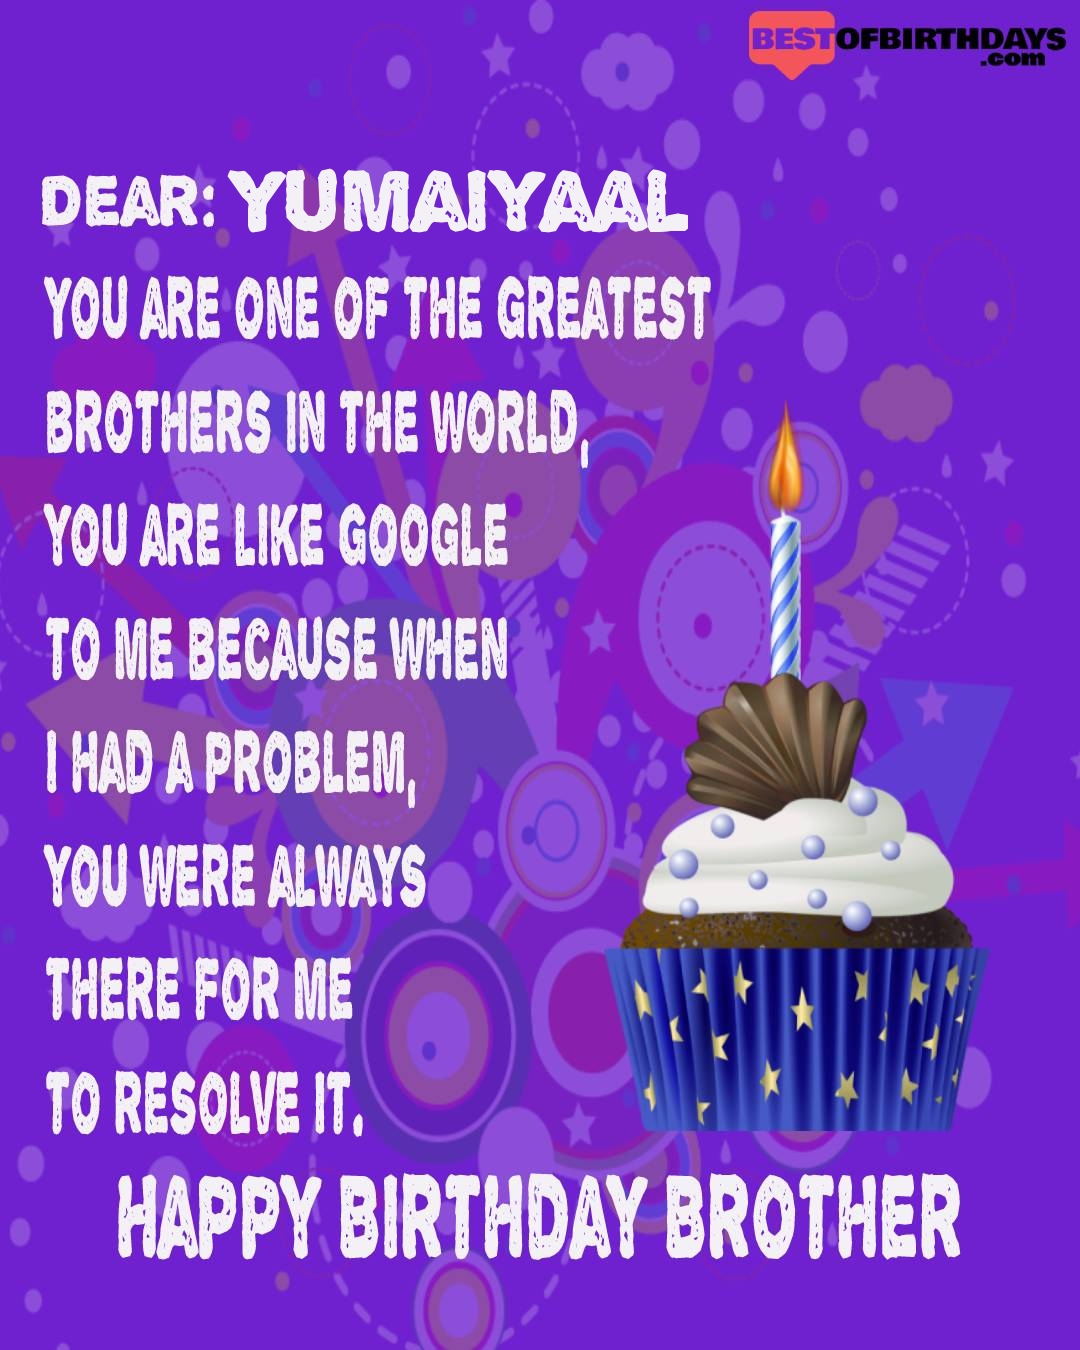 Happy birthday yumaiyaal bhai brother bro